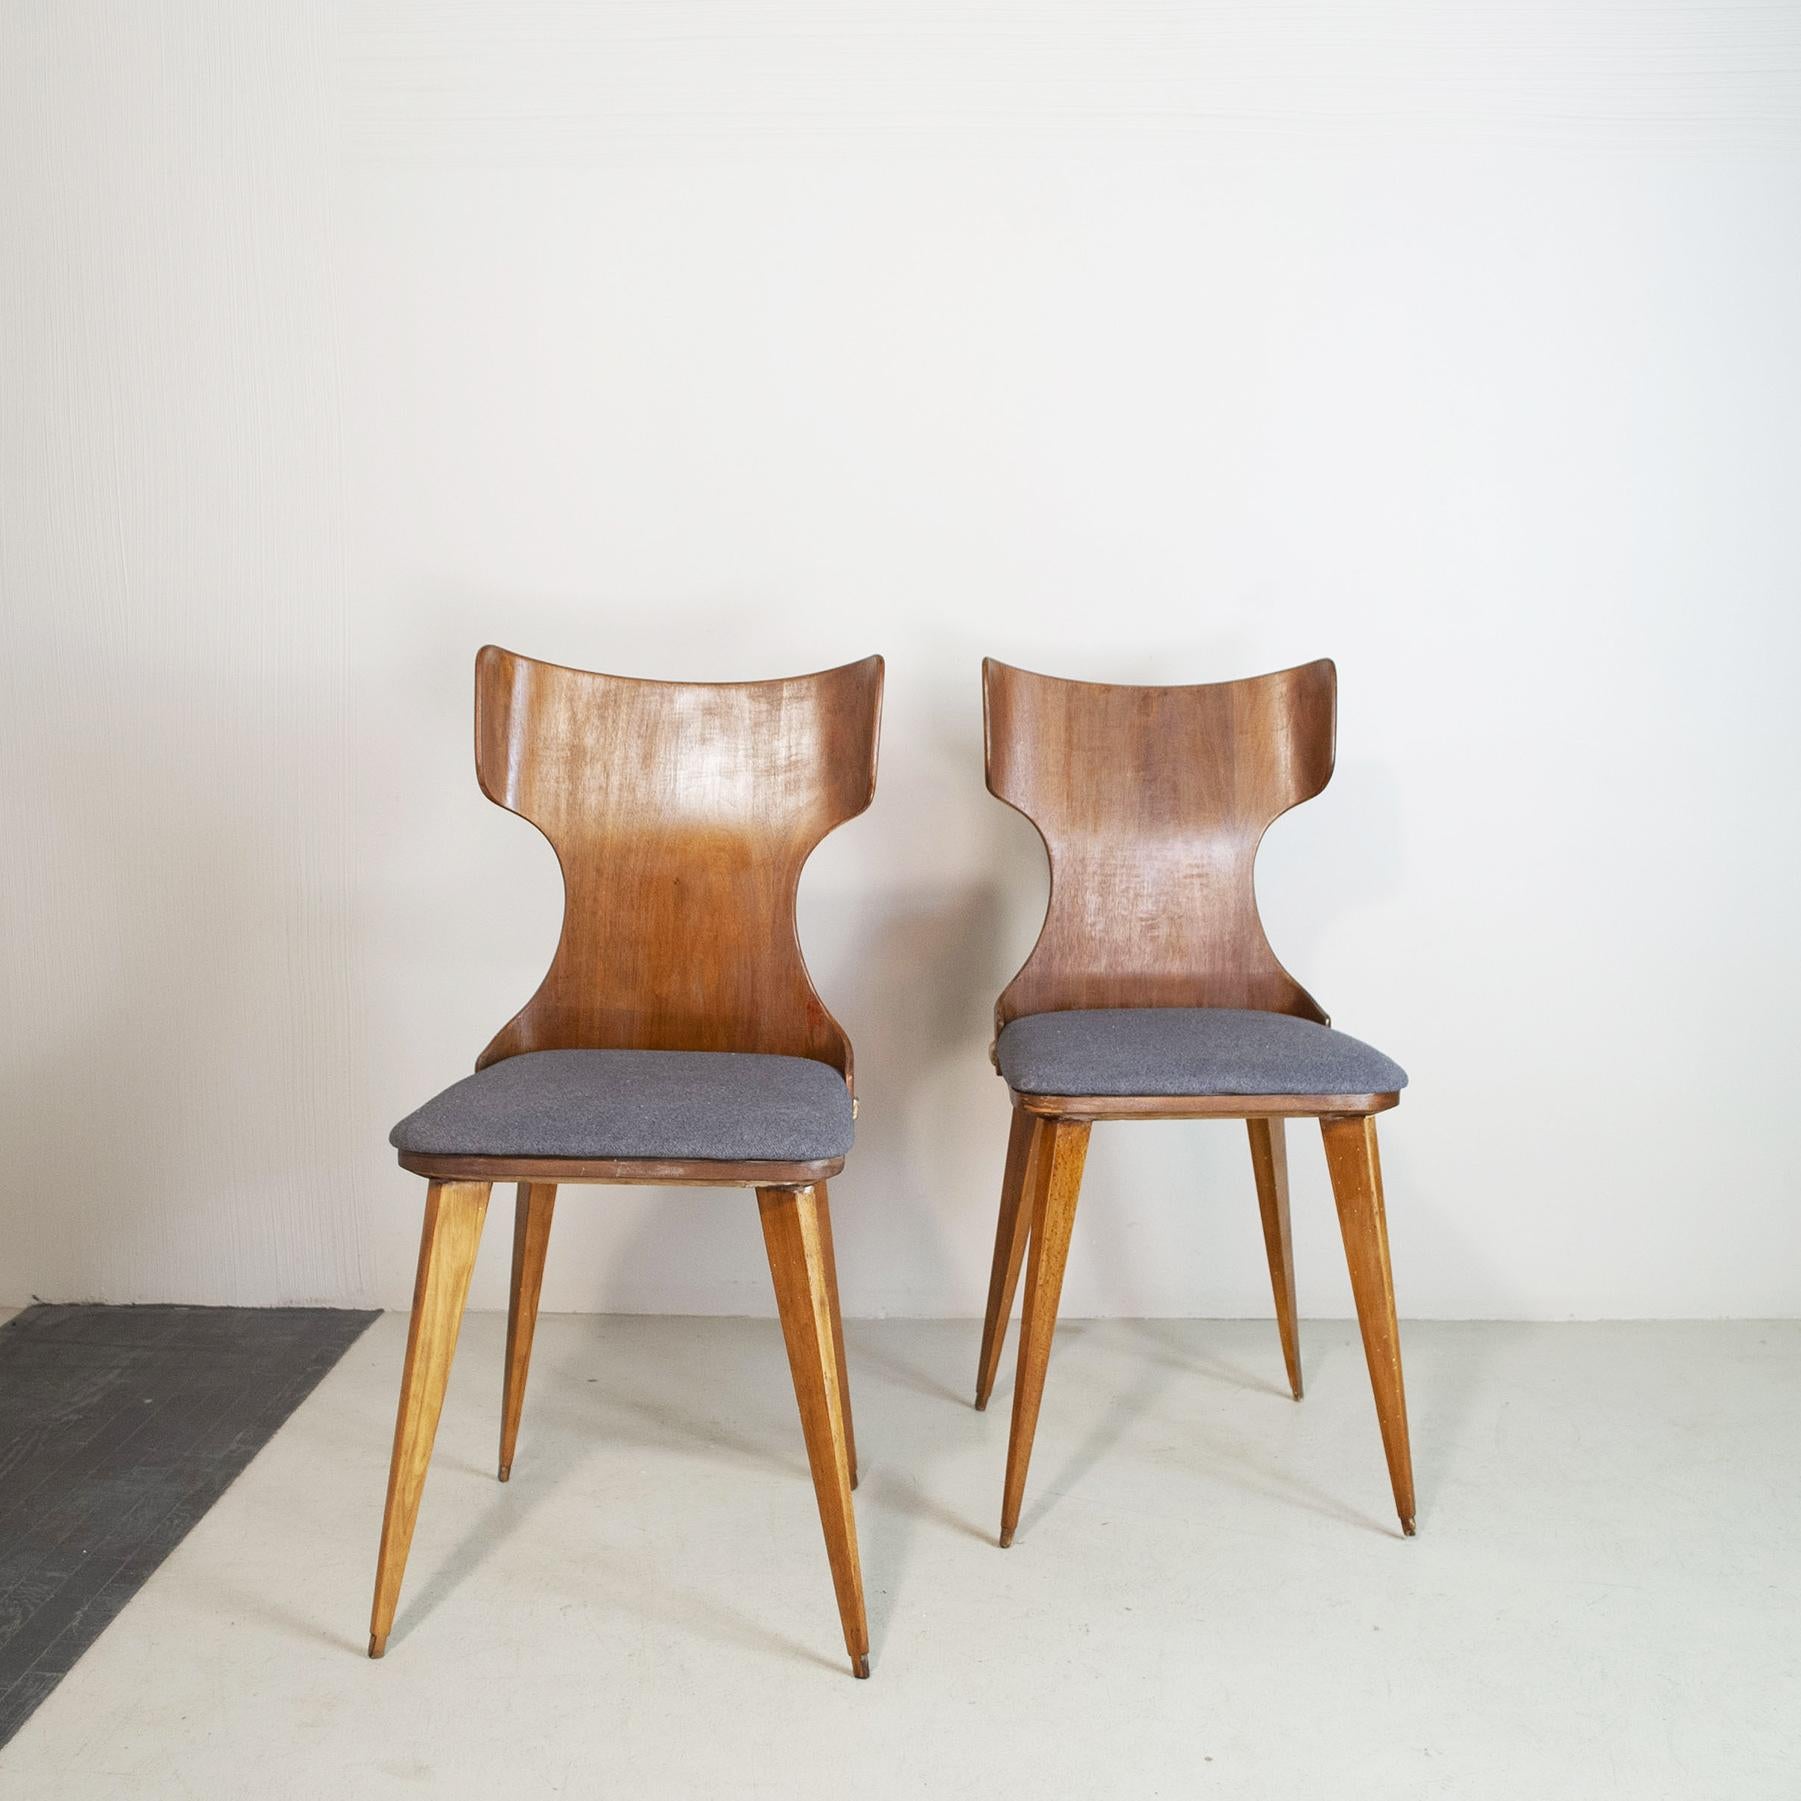 Mid-Century Modern Carlo Ratti Italian Midcentury Chairs Form the Fifties For Sale